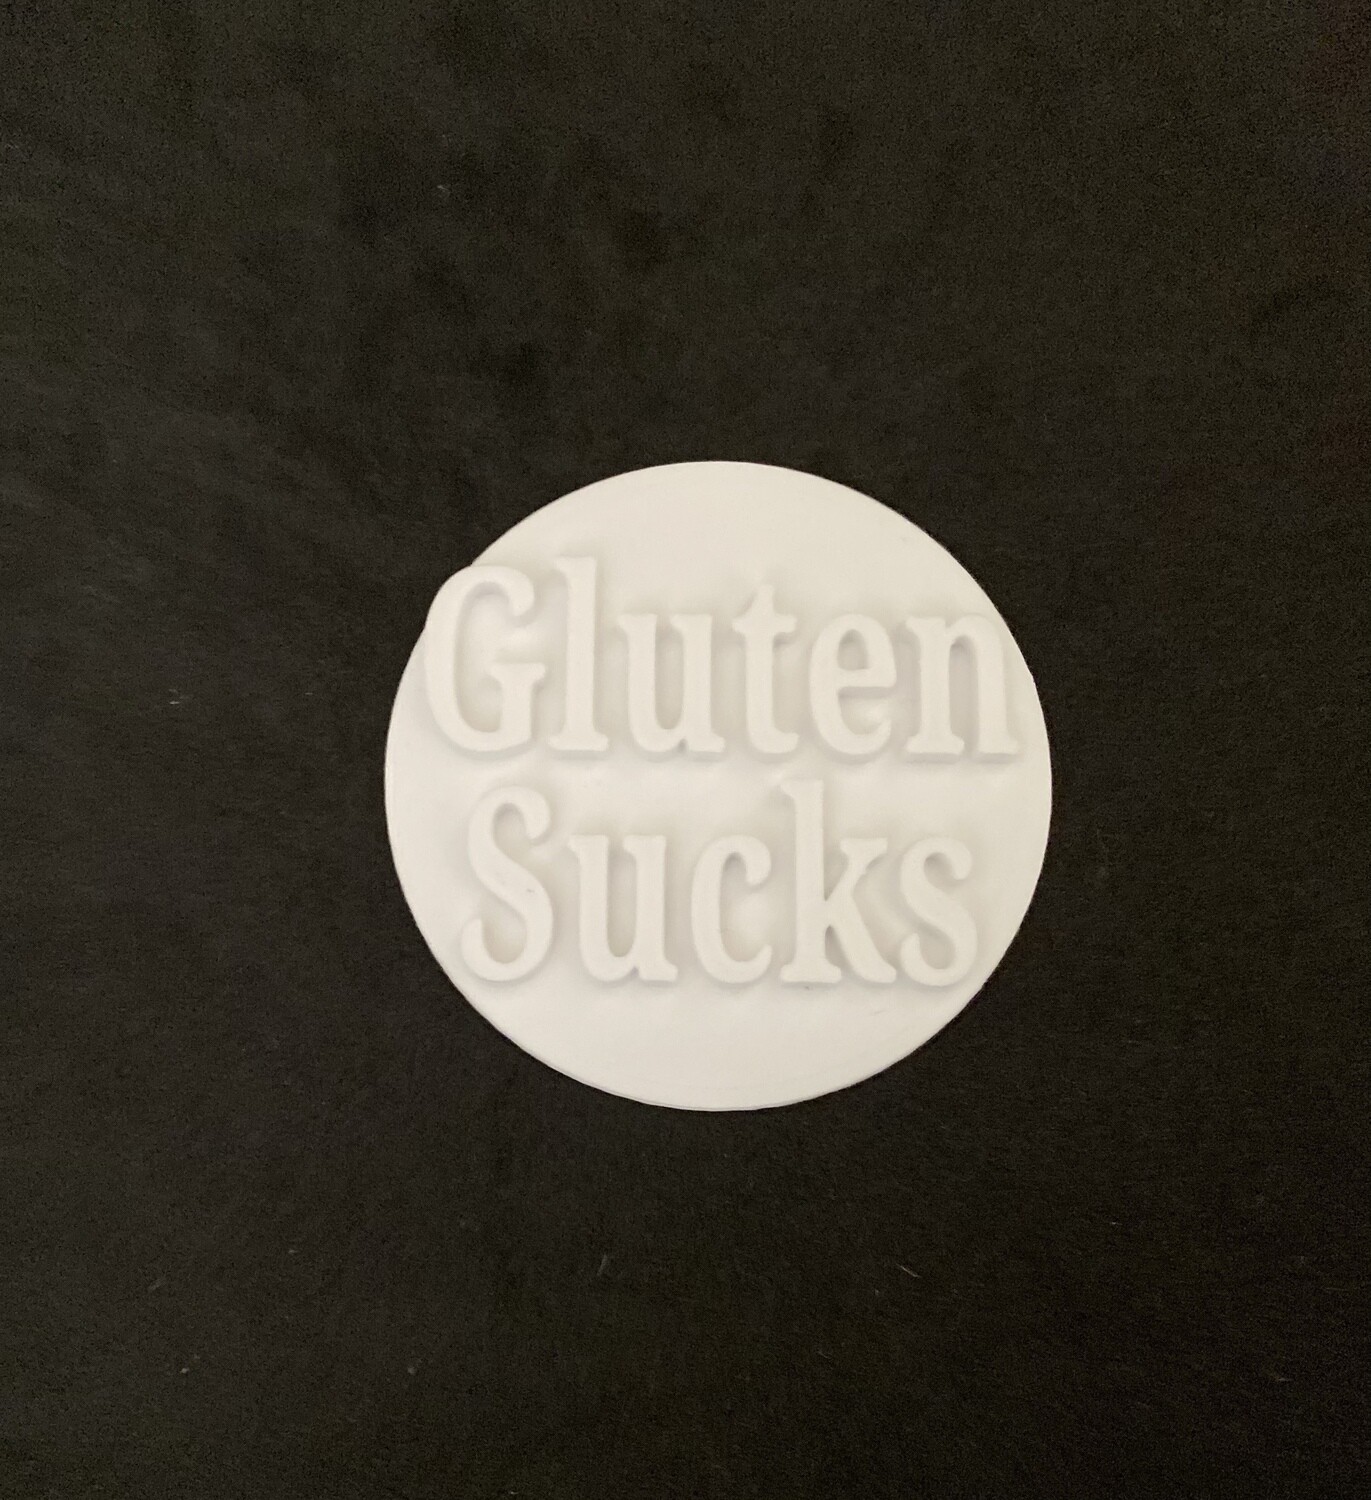 Gluten Sucks